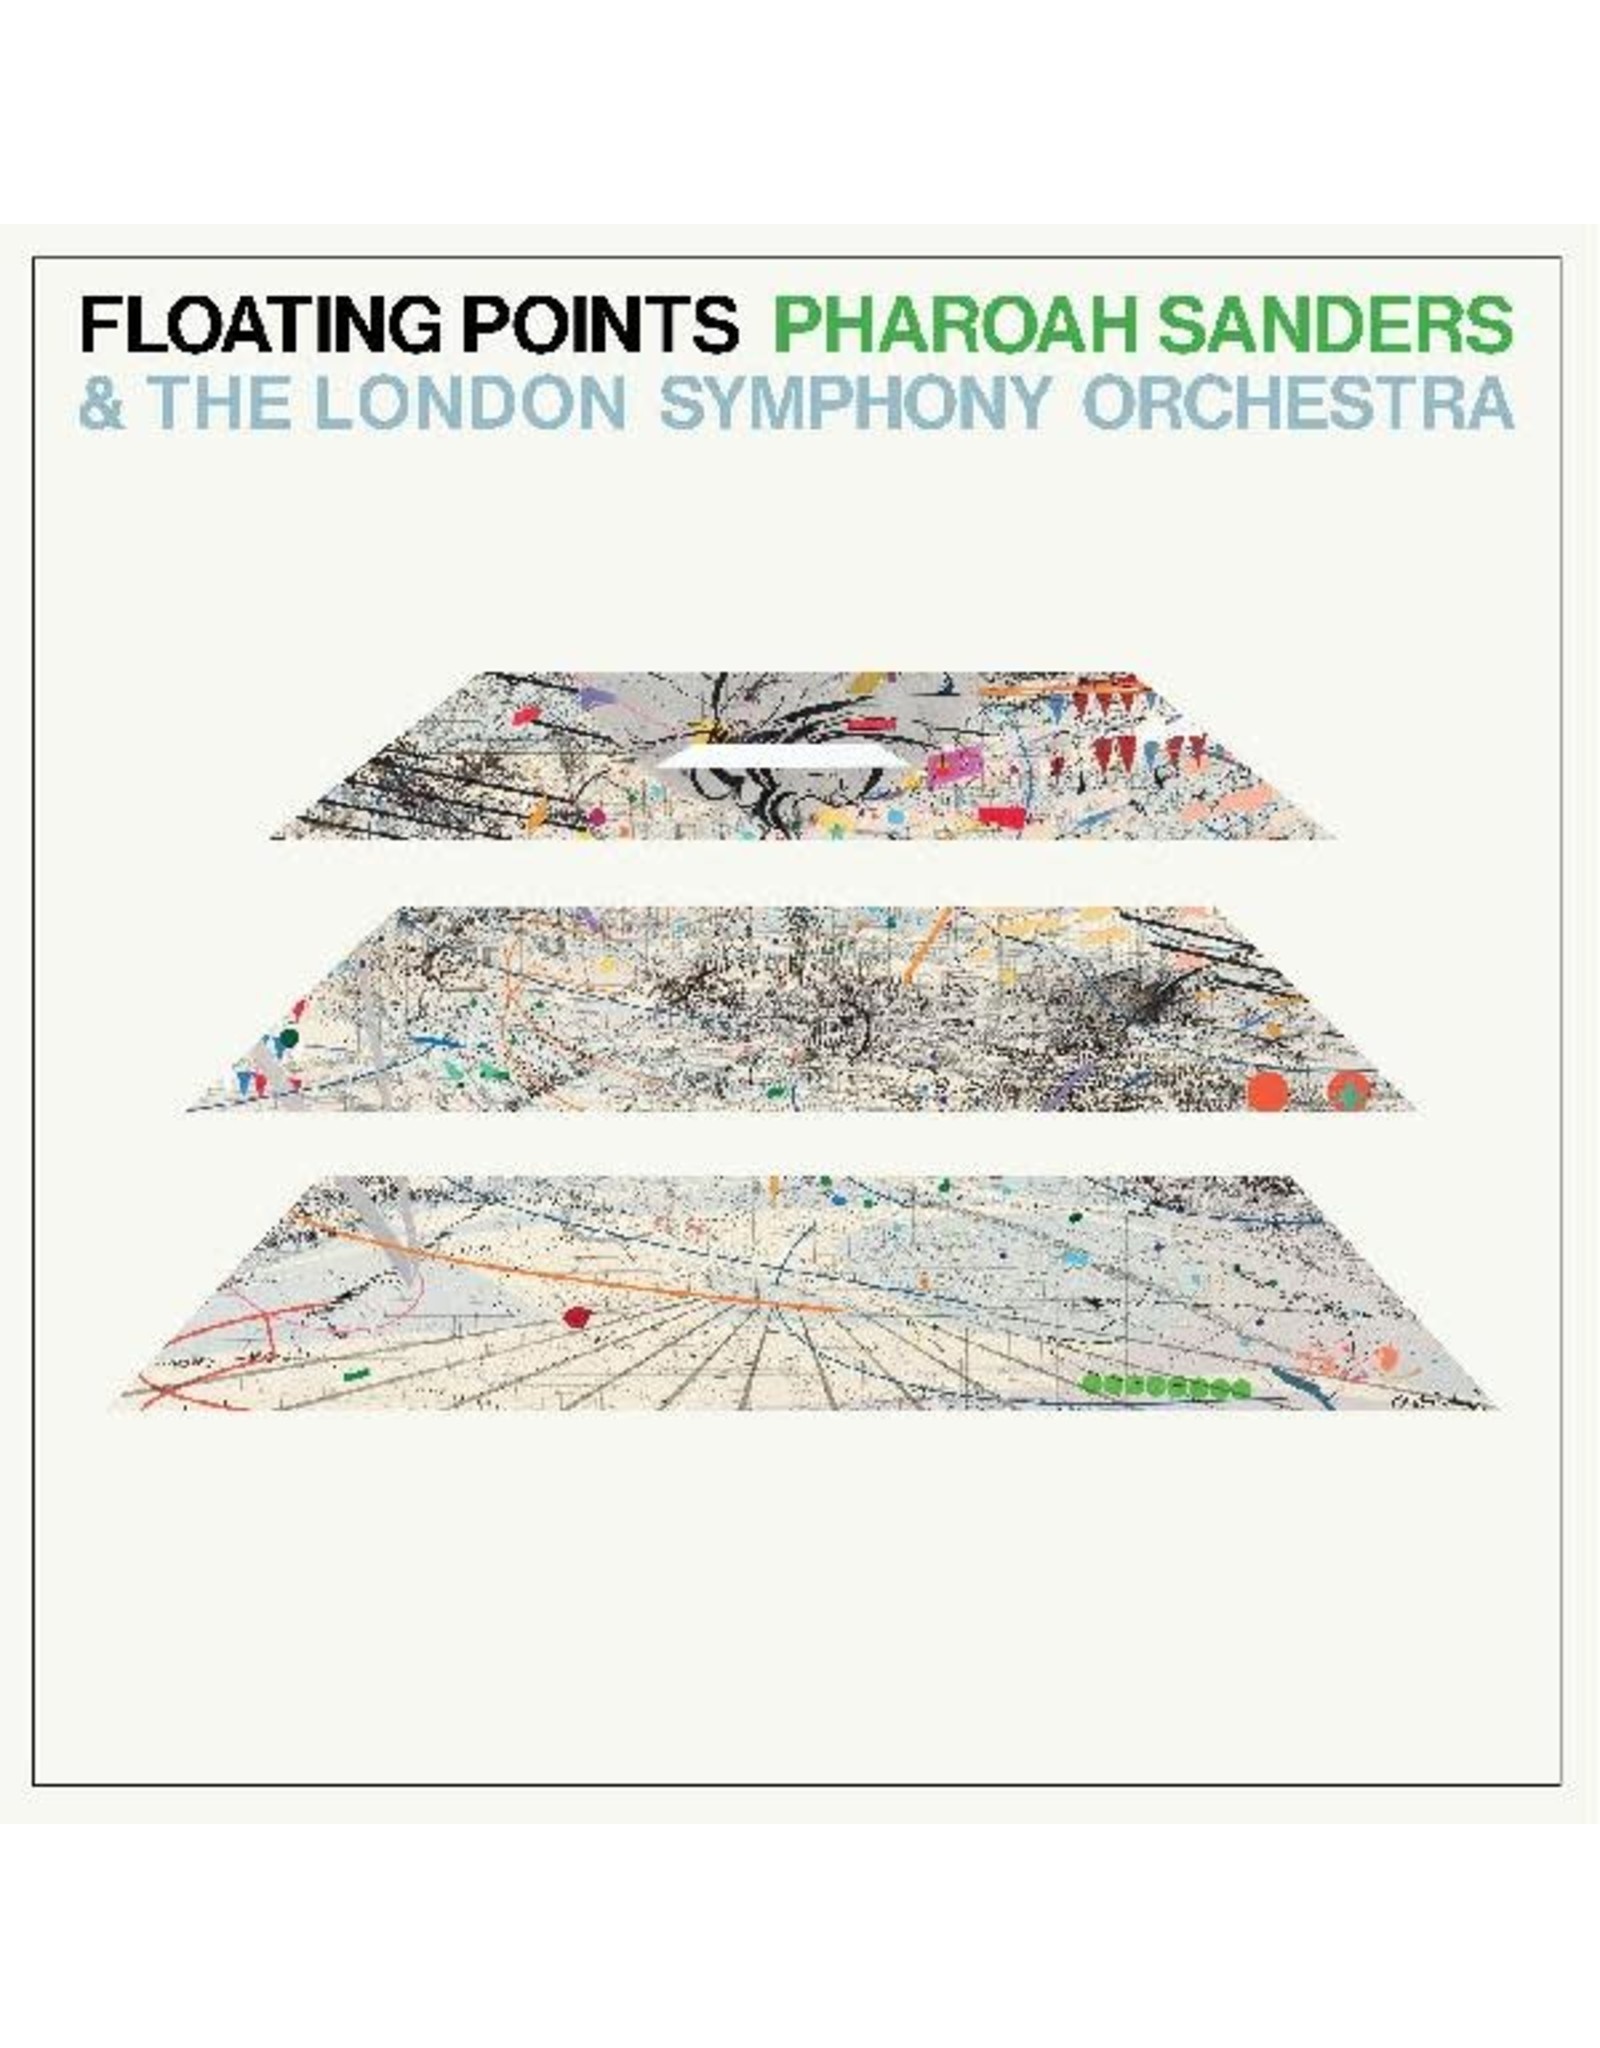 New Vinyl Floating Points, Pharoah Sanders & The London Symphony Orchestra - Promises LP